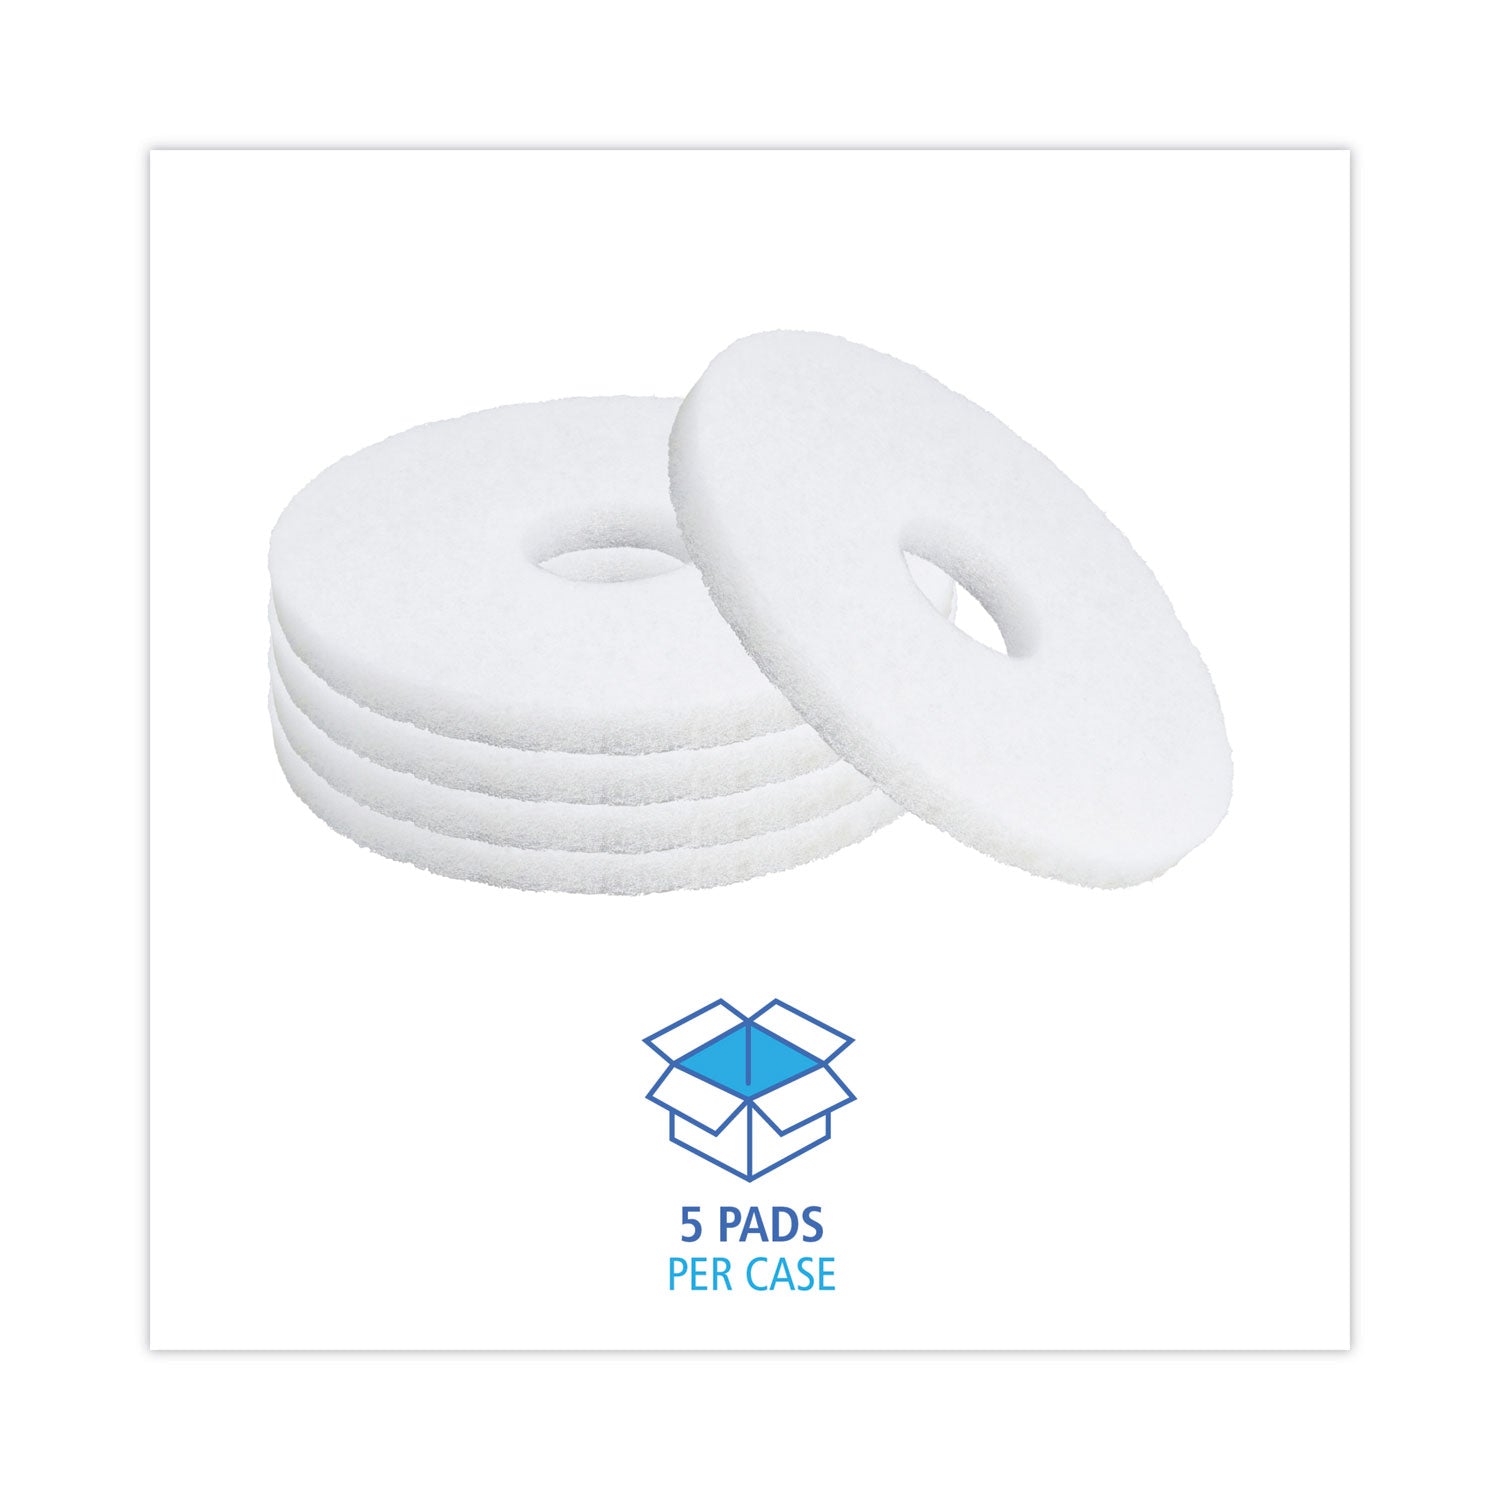 Polishing Floor Pads, 12" Diameter, White, 5/Carton - 